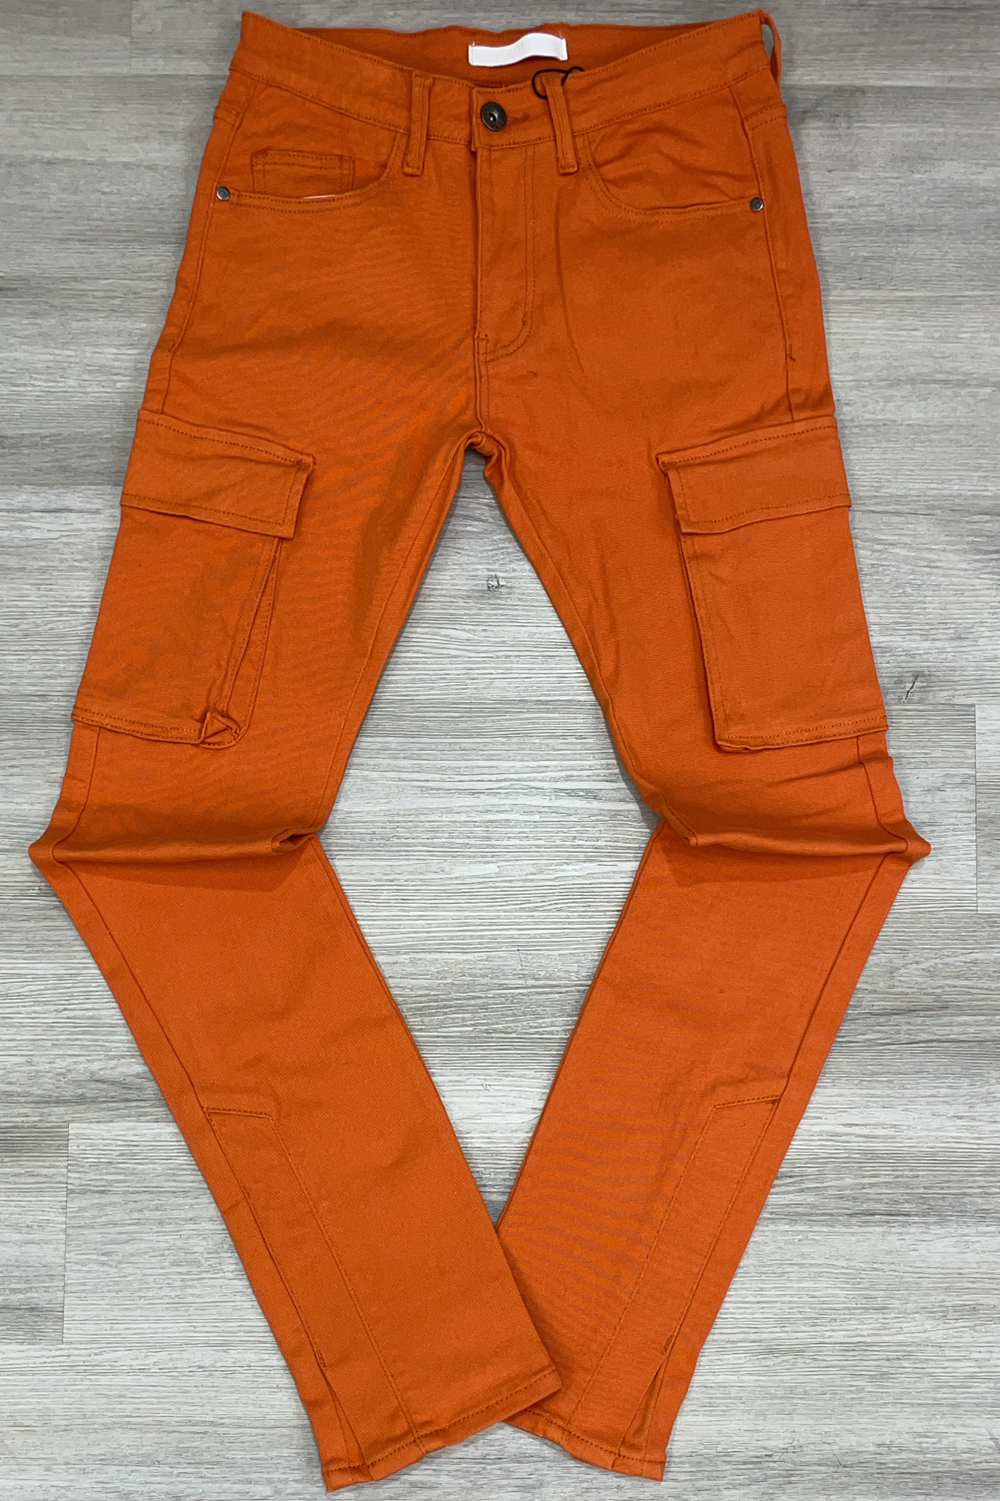 KDNK - stacked cargo pants (orange)